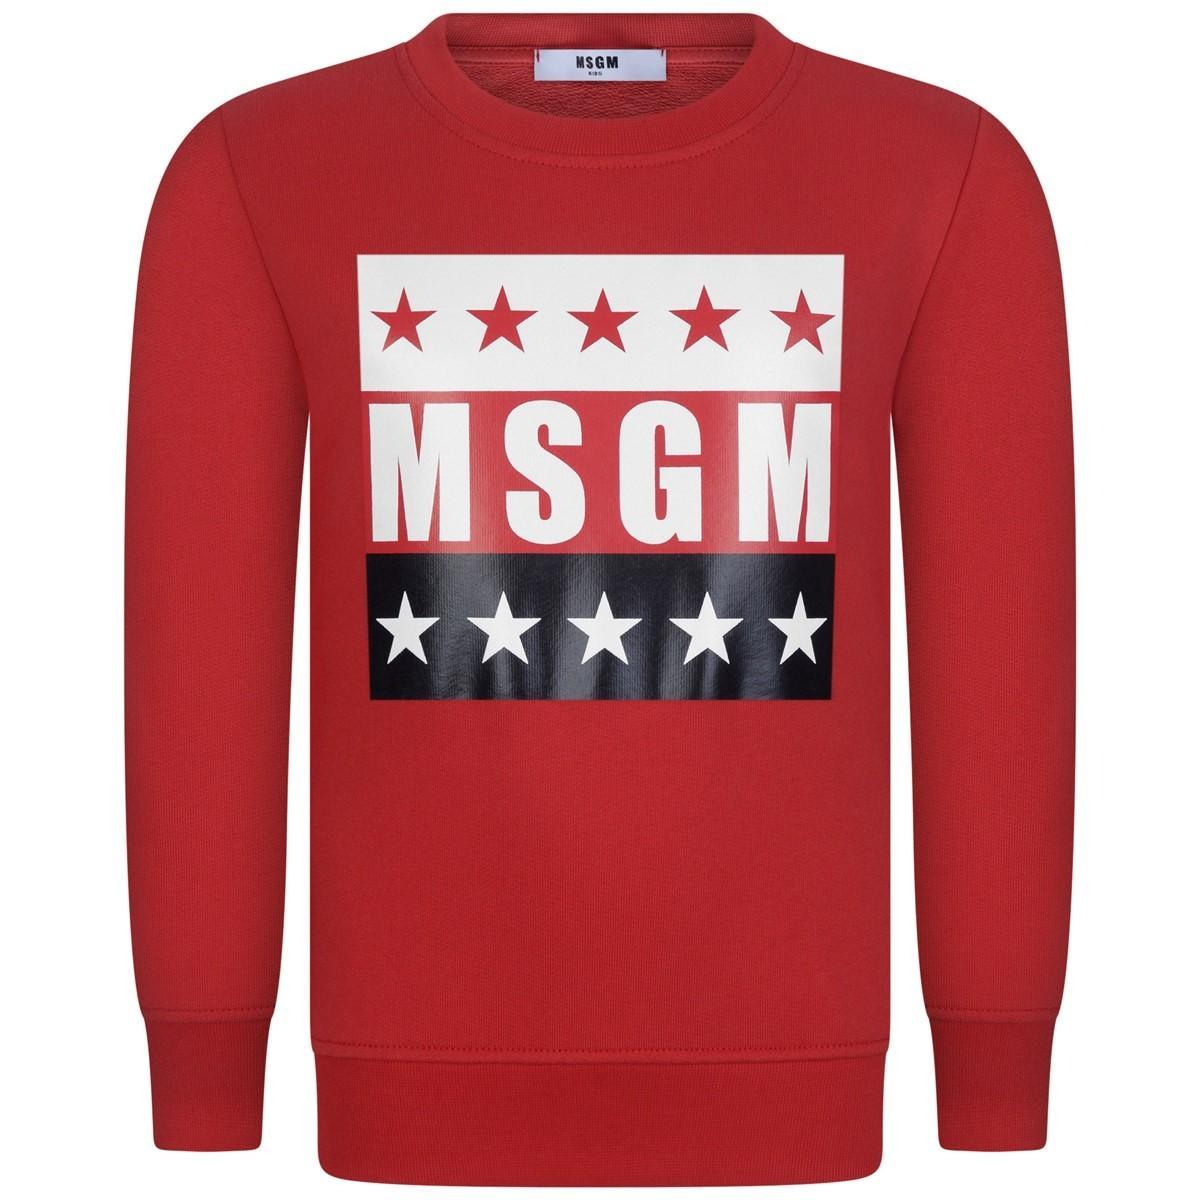 Boy Looking at Star Logo - MSGM Boys Red Star Logo Sweater